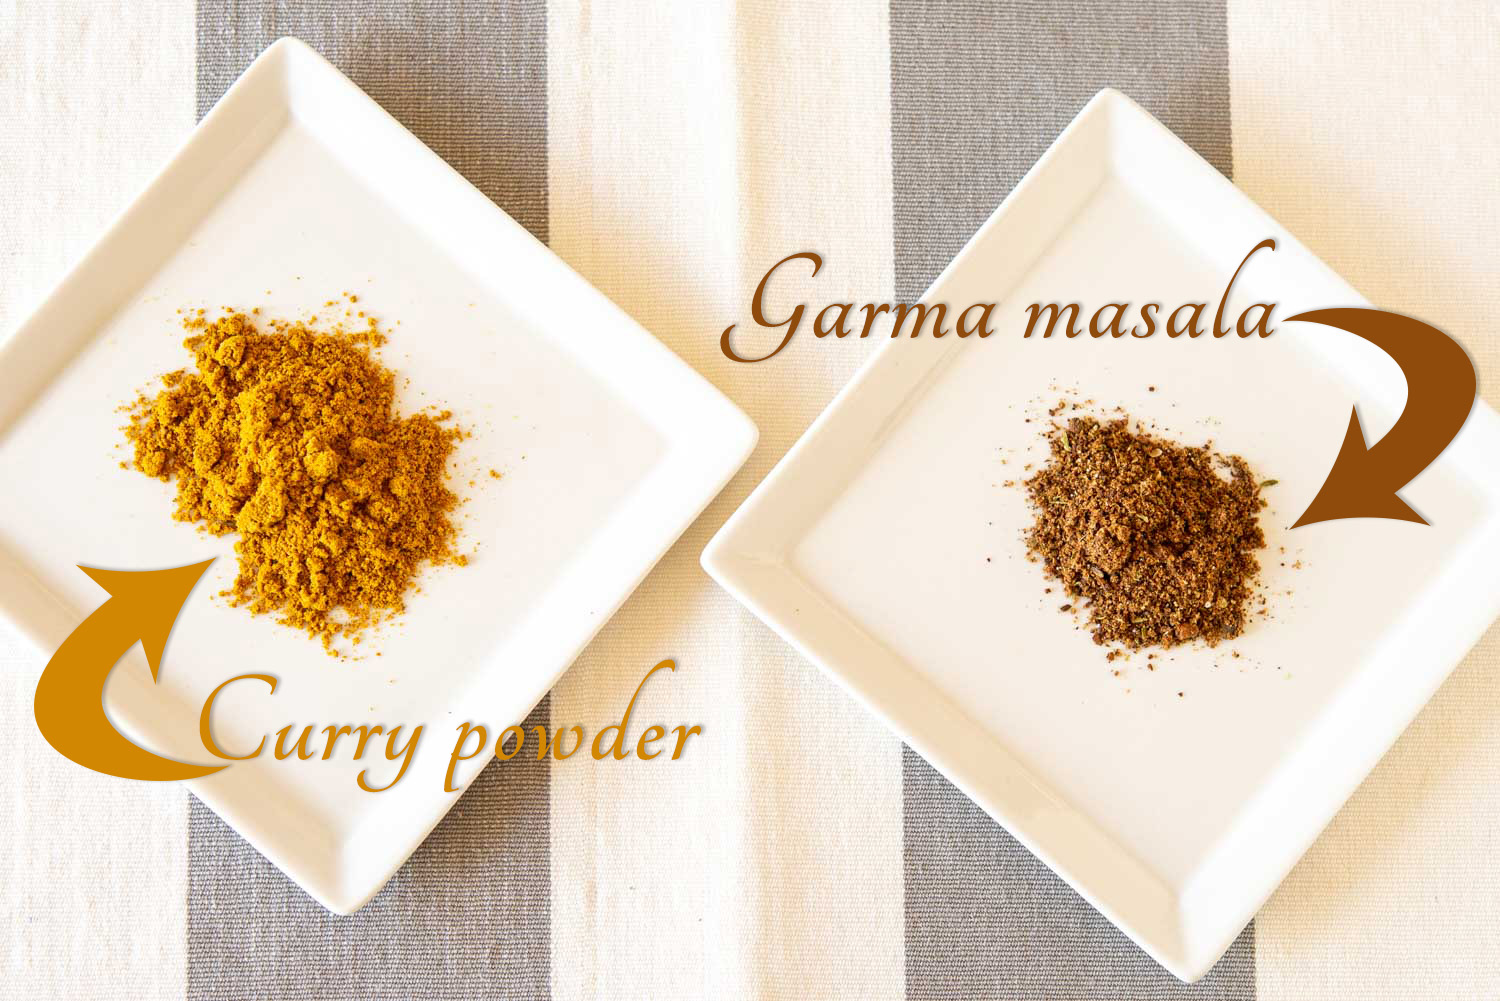 Curry powder and garam masala